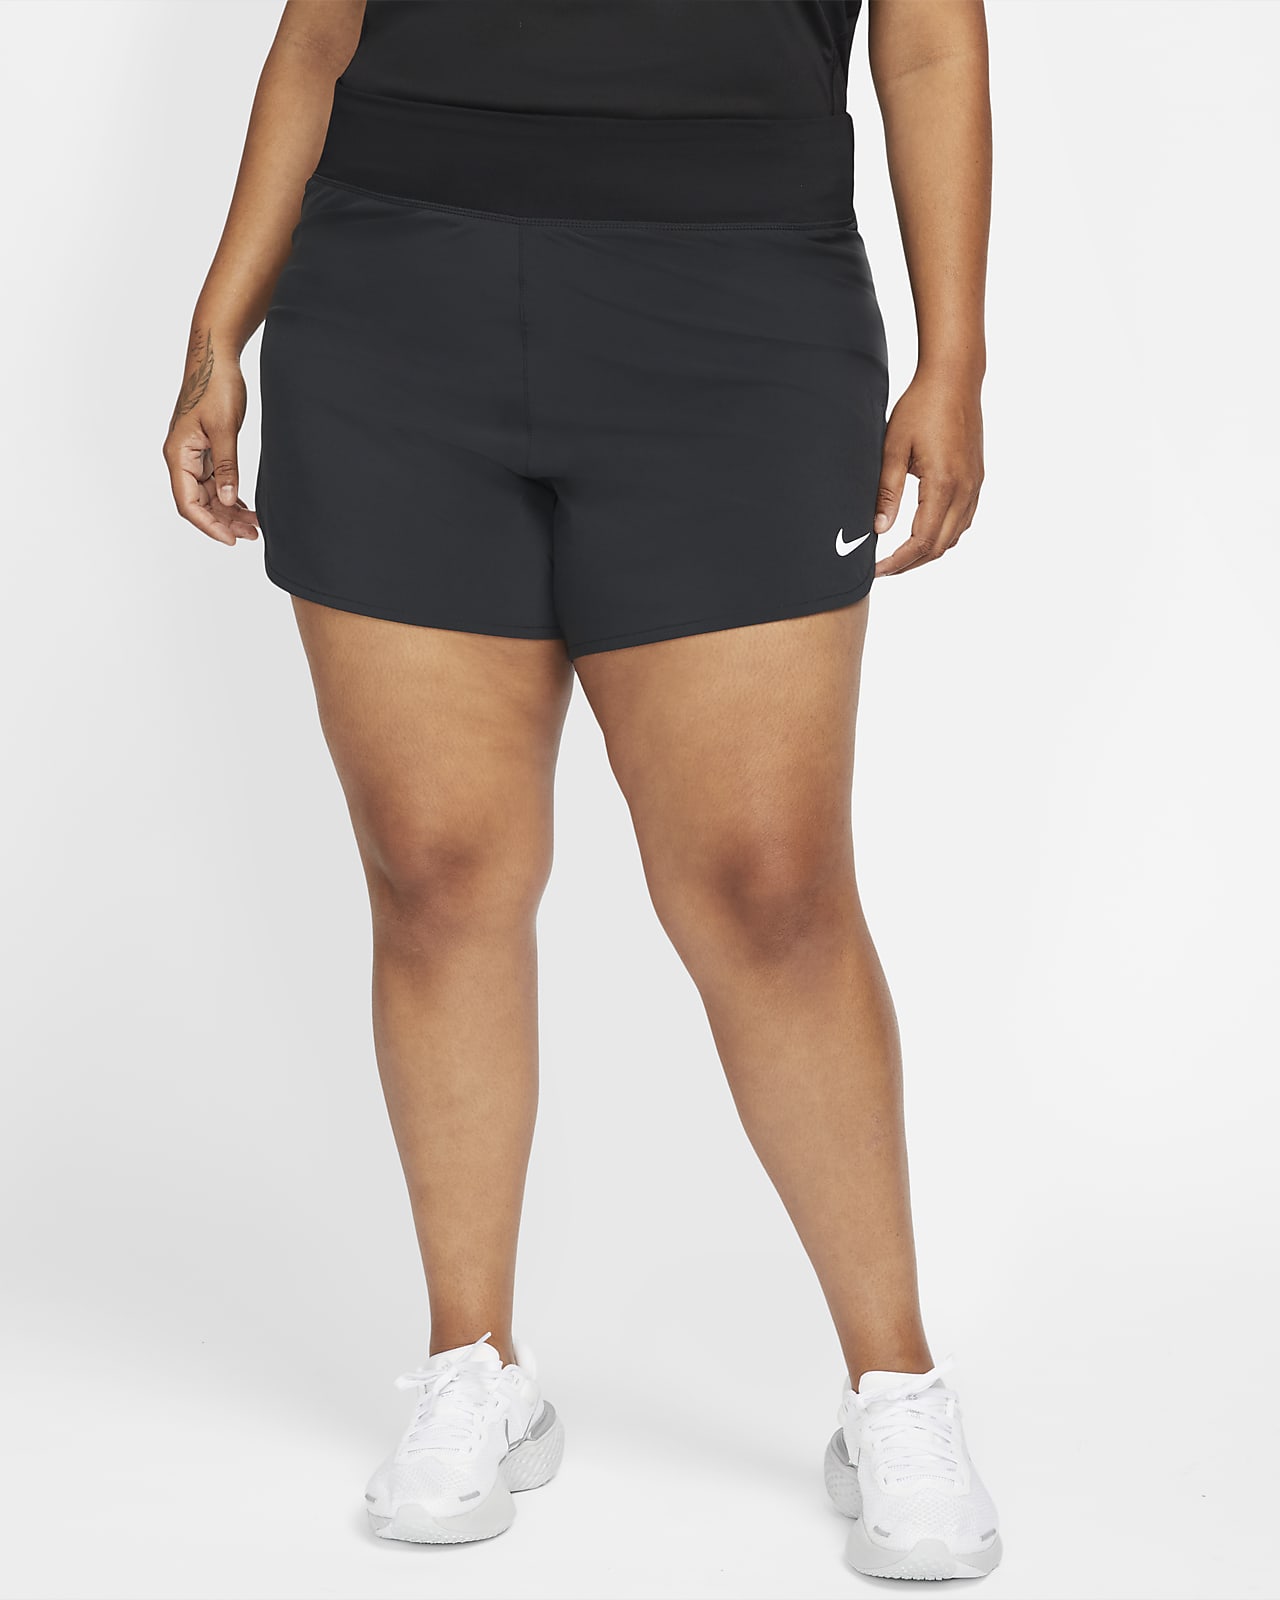 Shorts de running para mujer (talla grande) Nike Eclipse